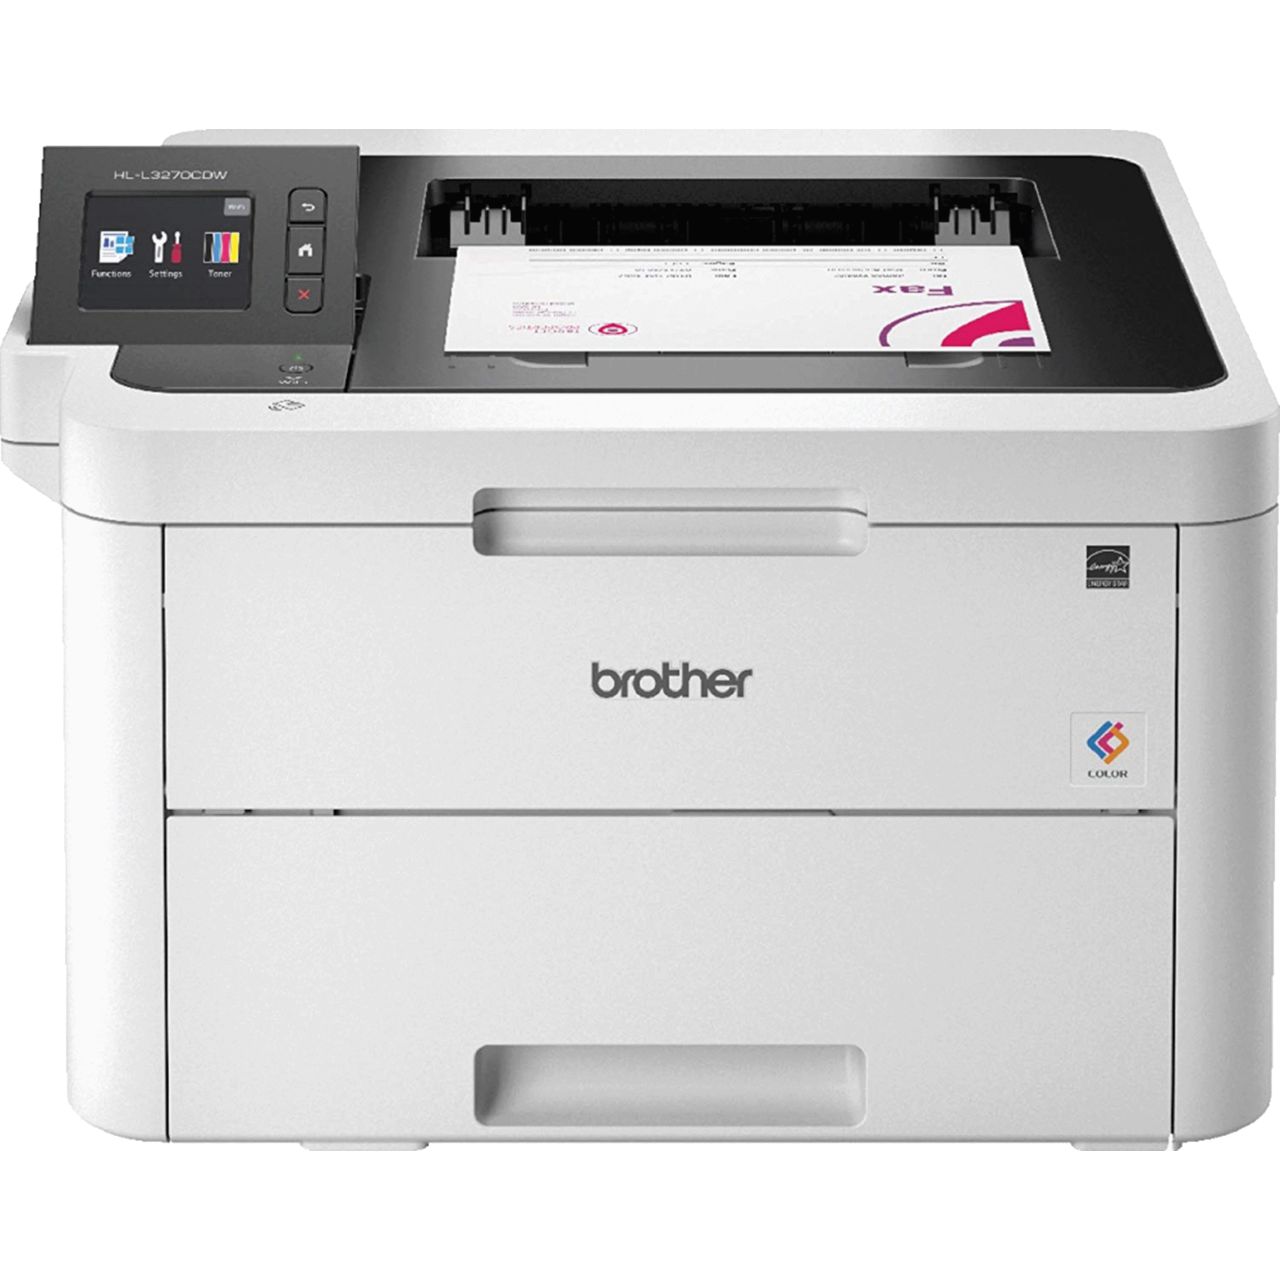 Brother HL-L3270CDW Laser Printer Review